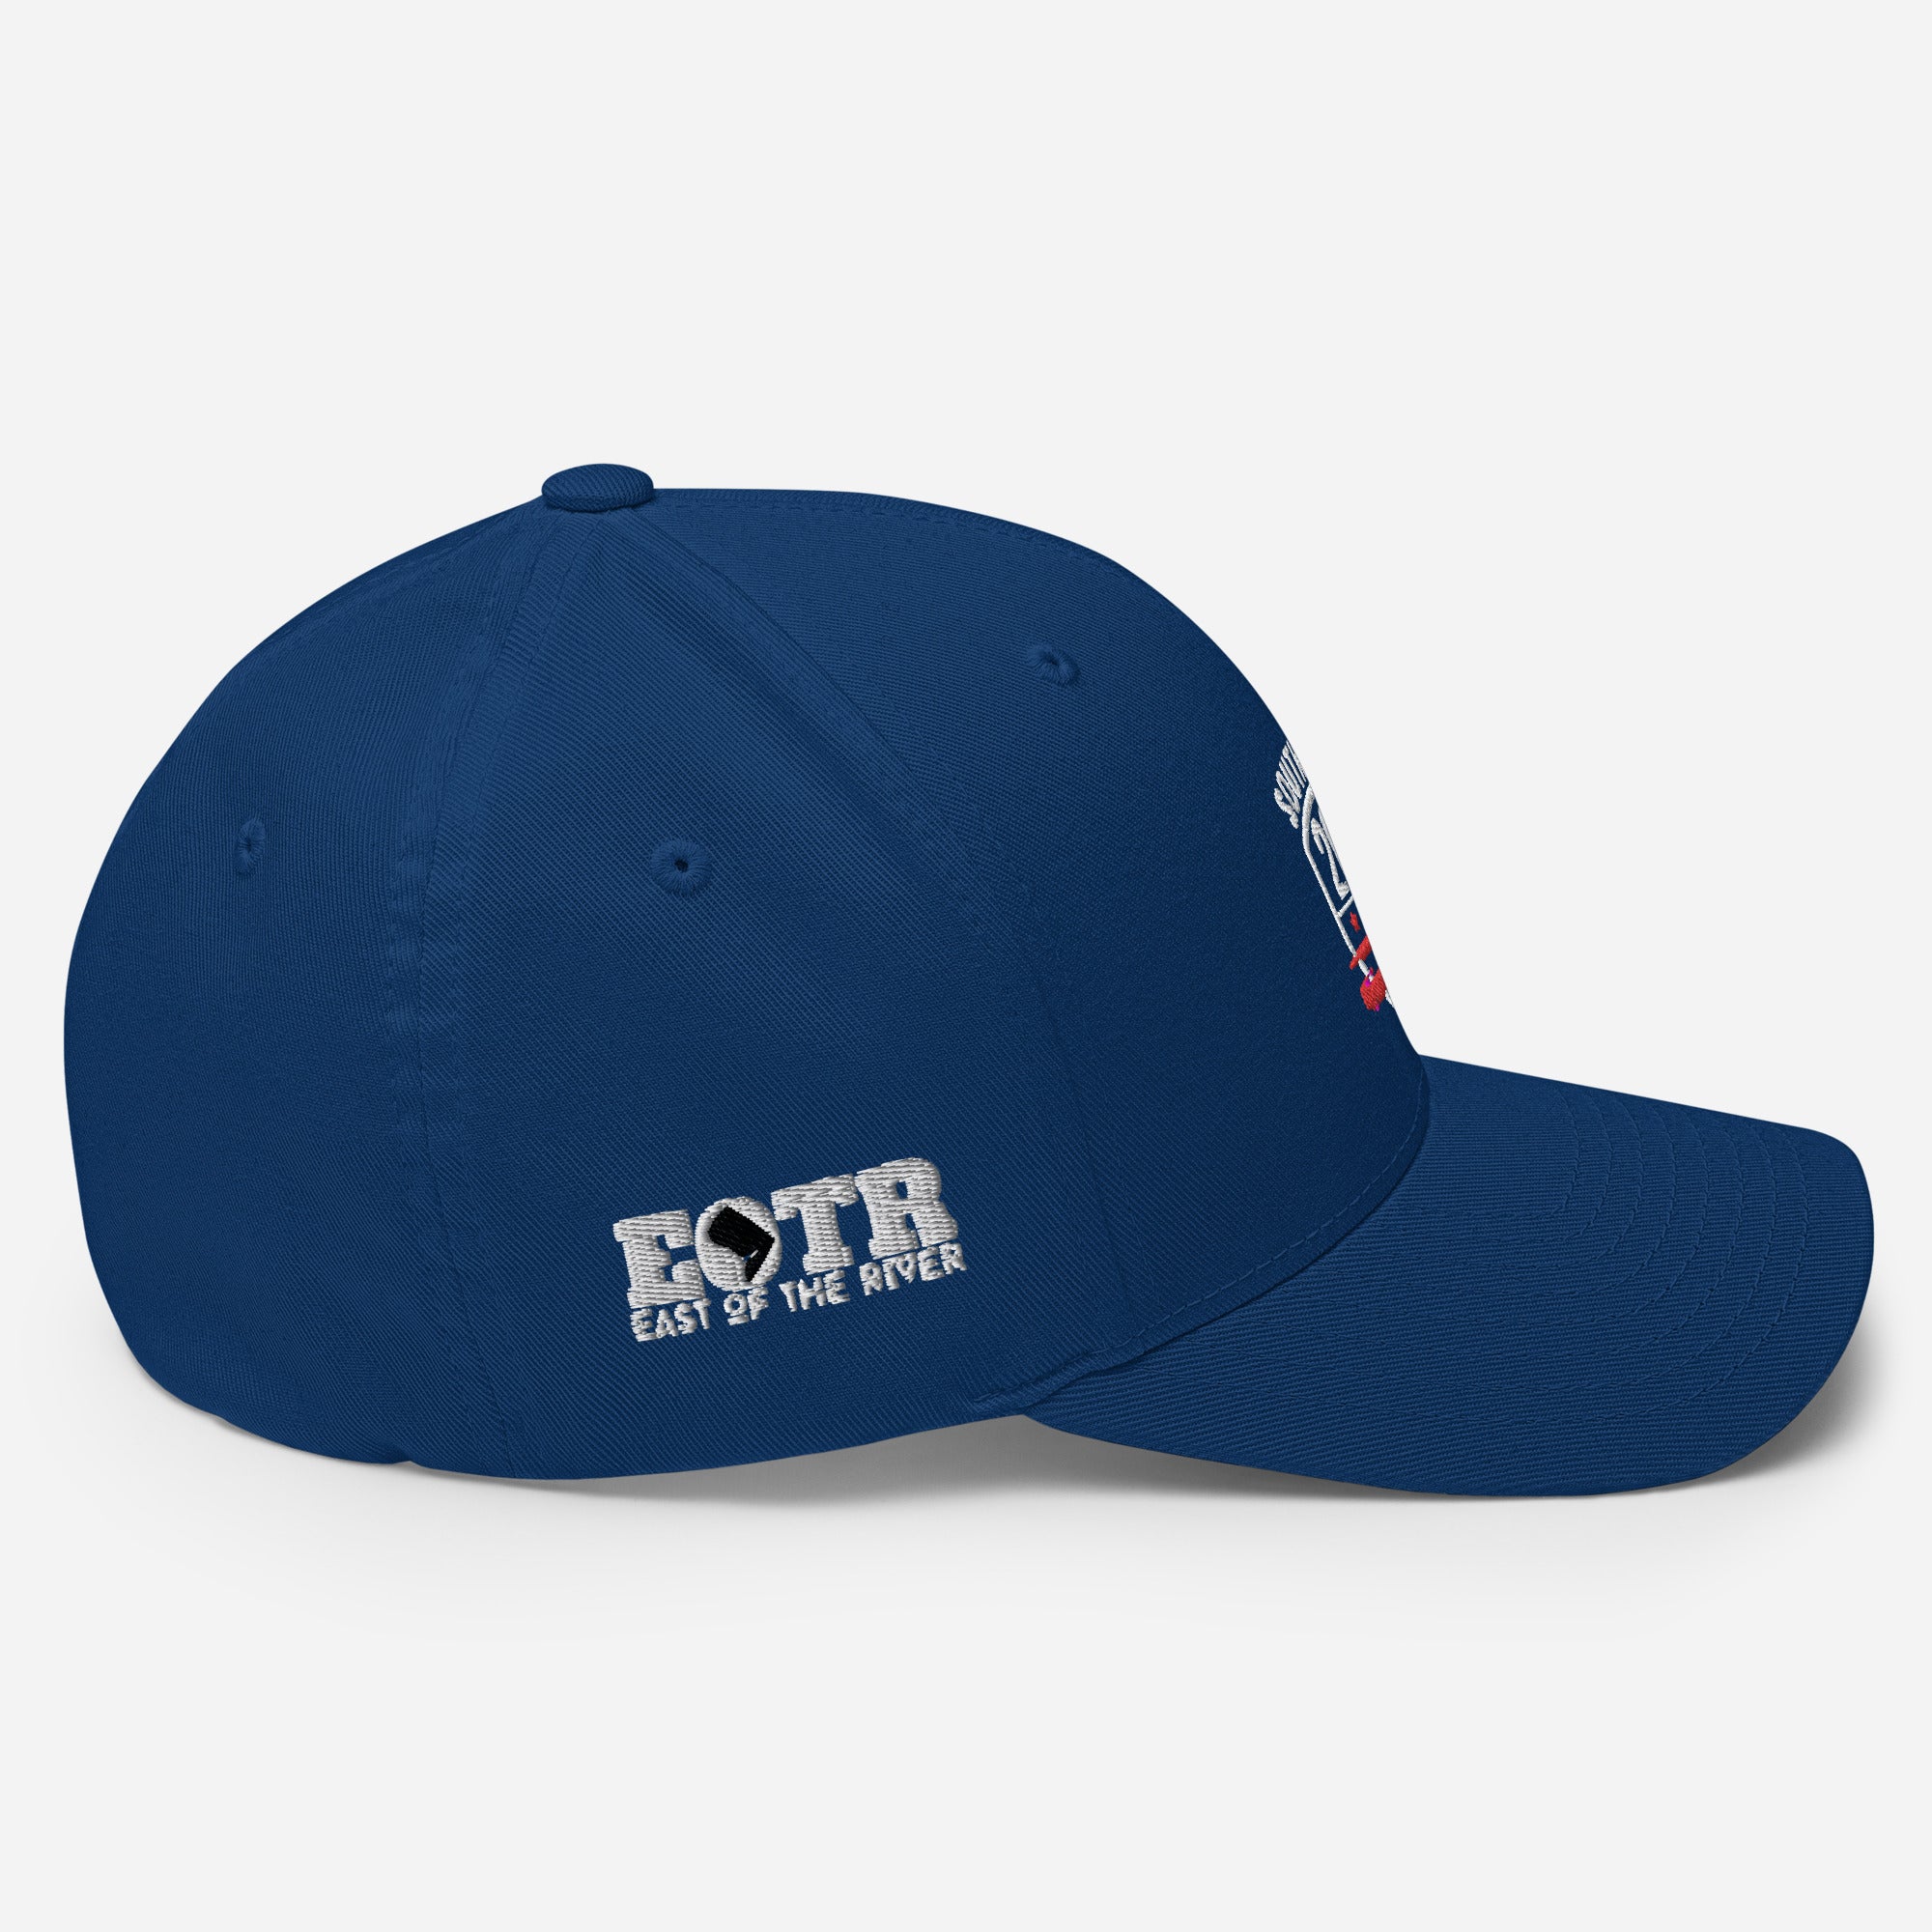 "Southeast / 202 Emblem & EOTR" - Navy Structured Twill Cap